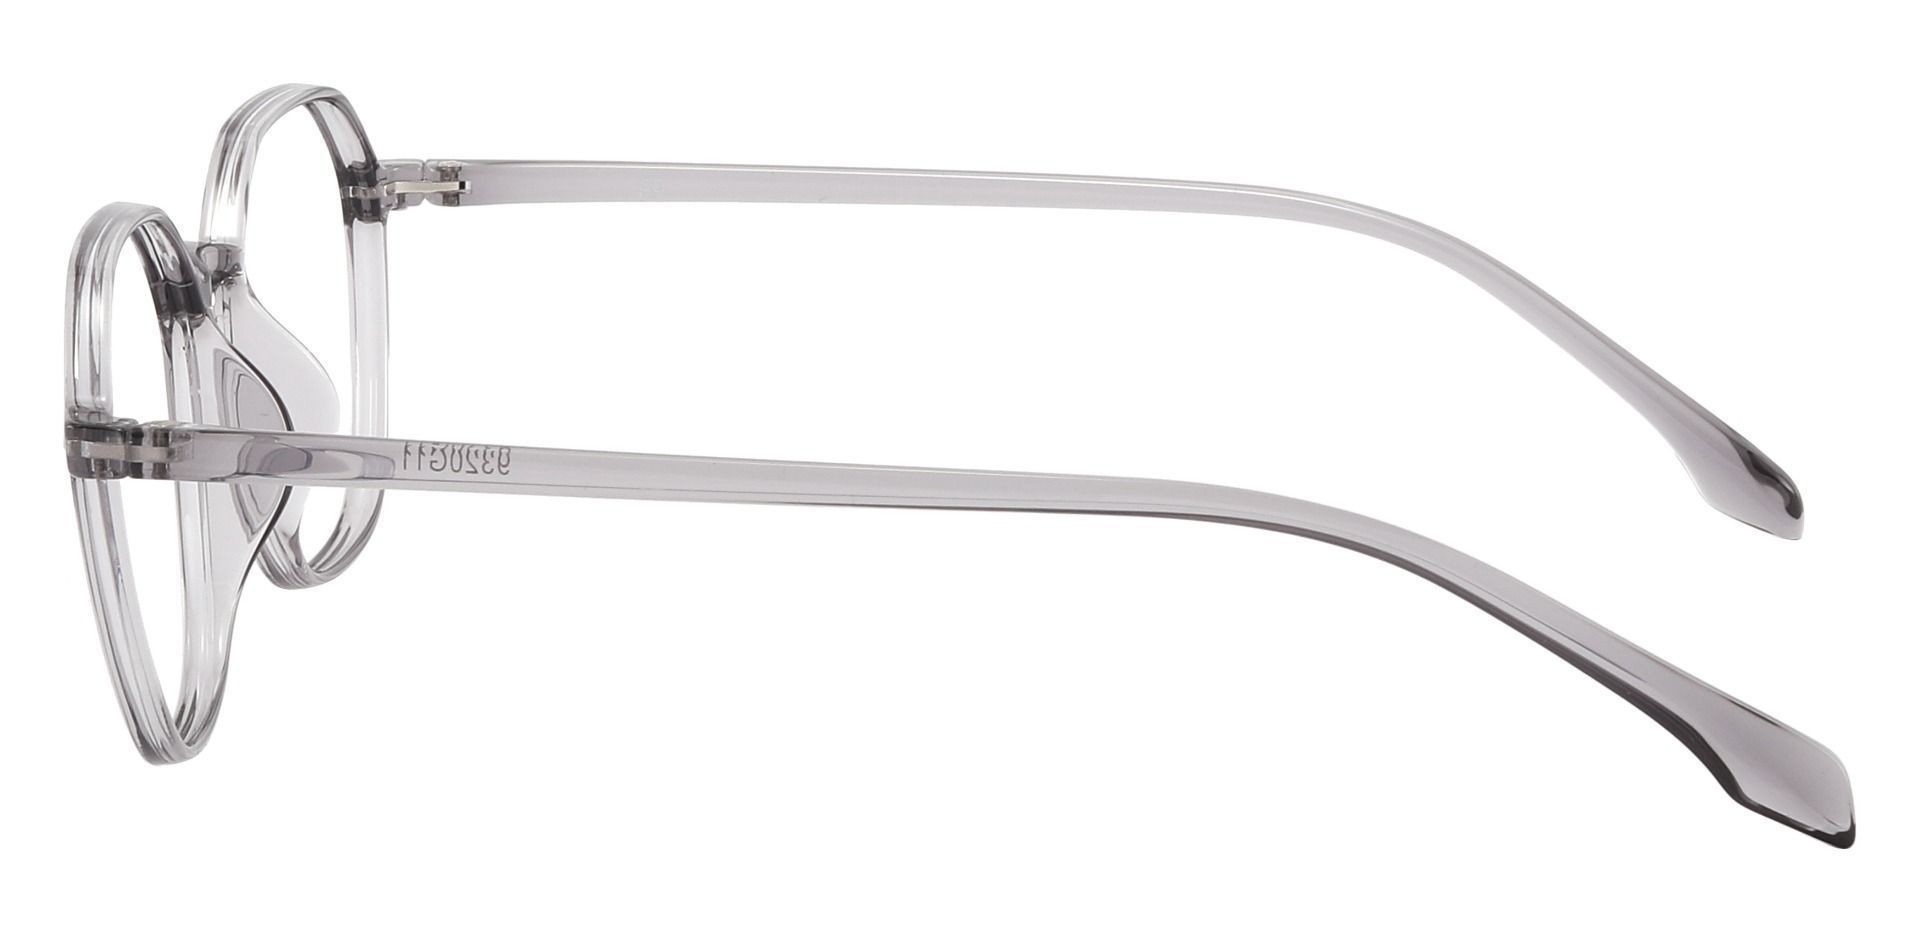 Detroit Geometric Lined Bifocal Glasses - Gray